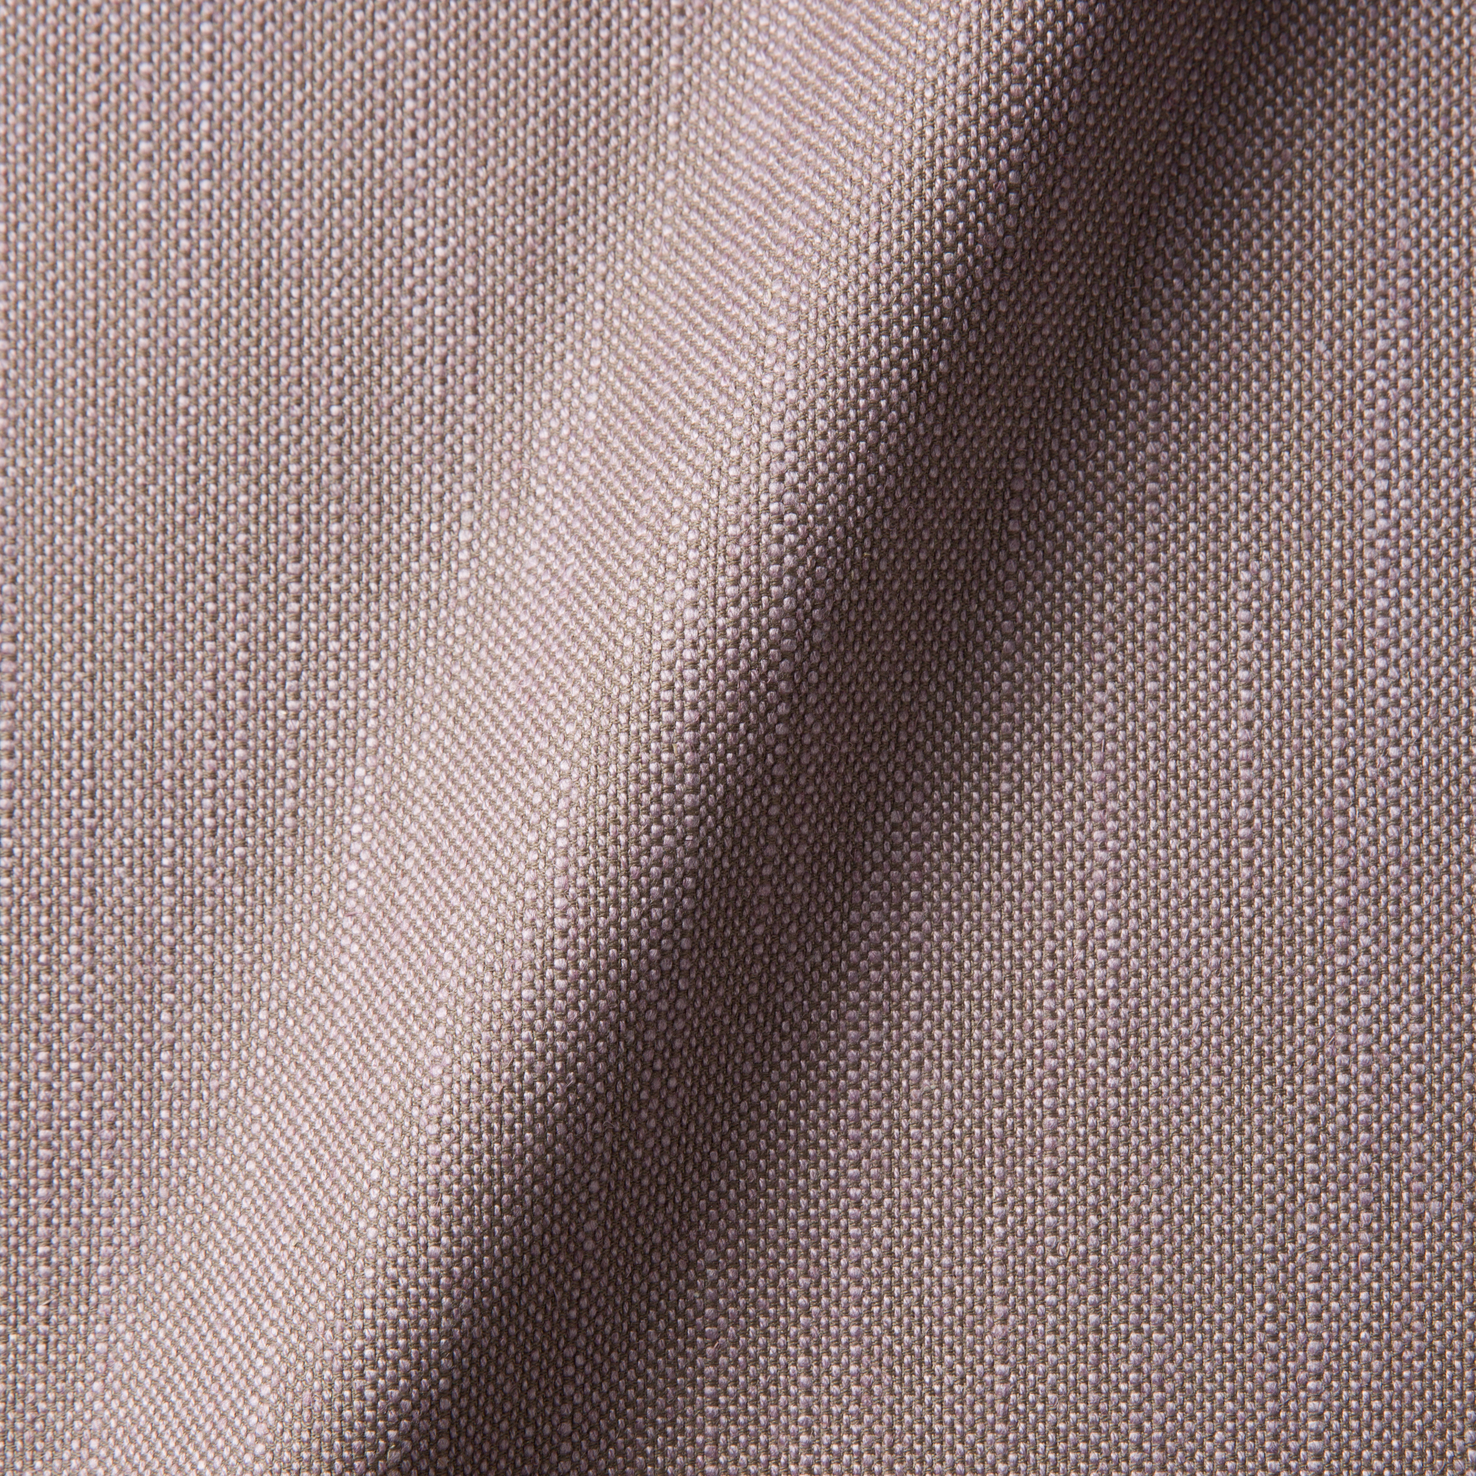 Fabric sample Macchedil Sottile Pinkish